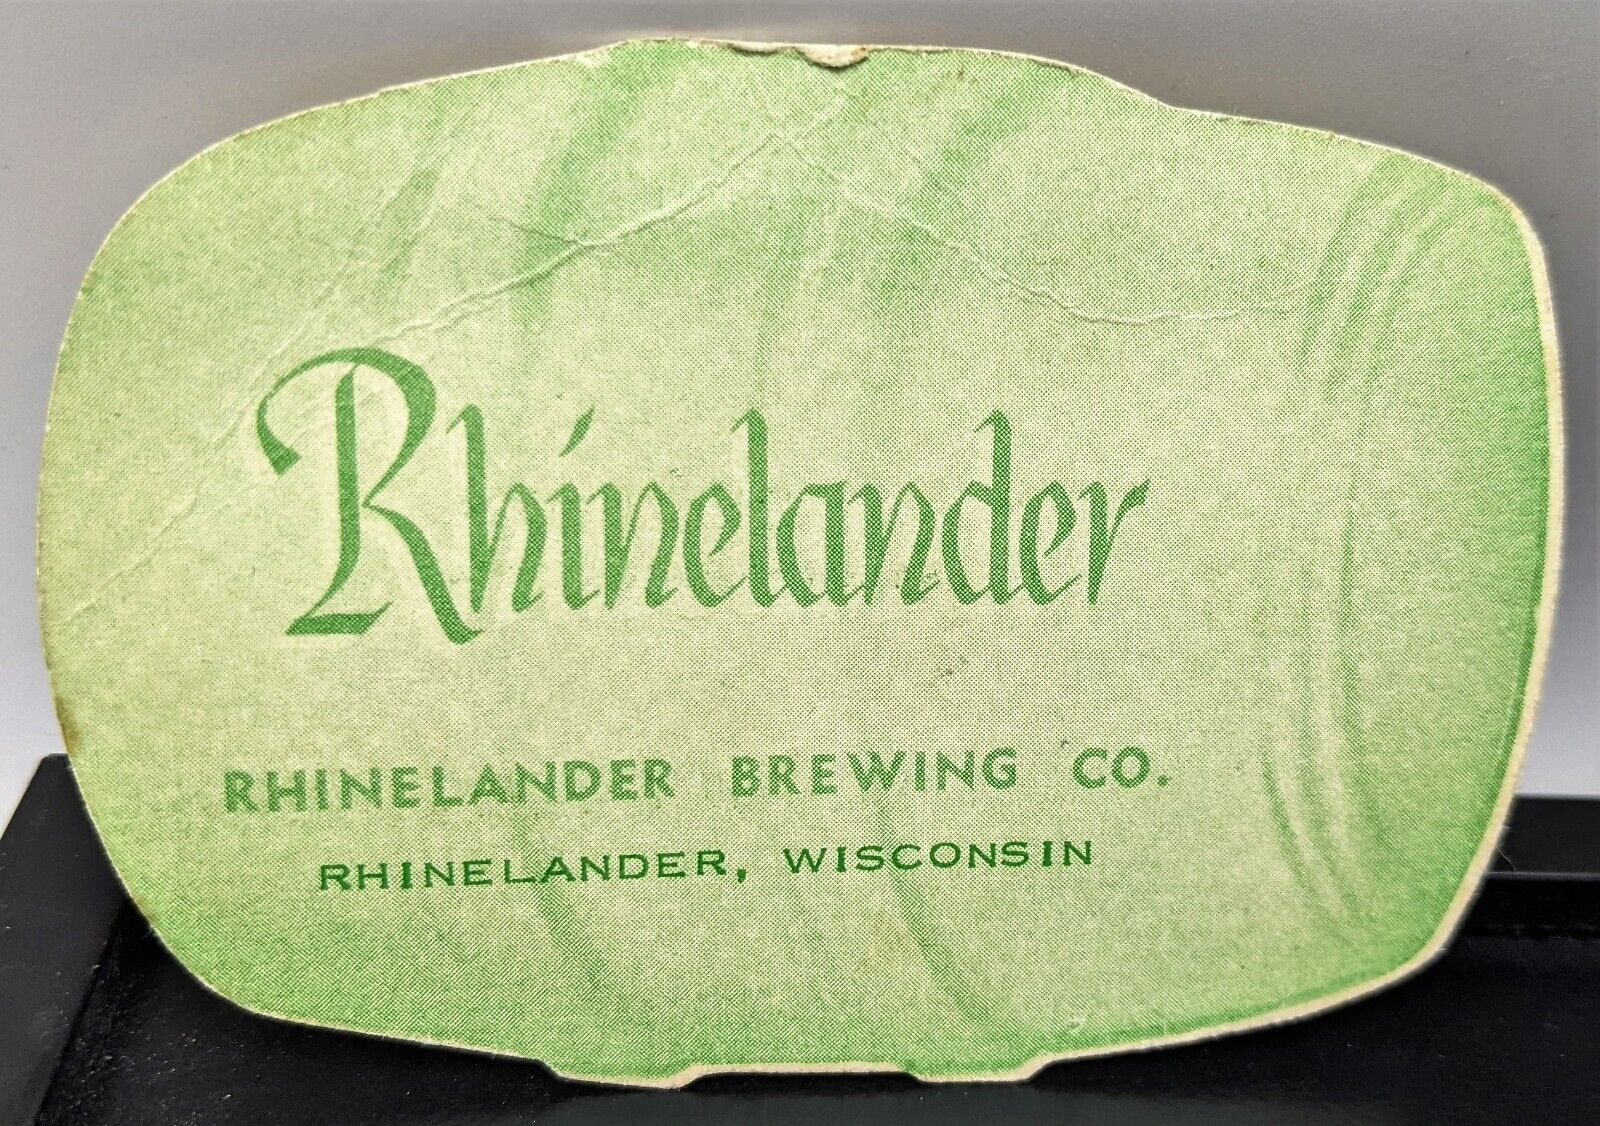 Rhinelander Brewing Co. Wisconsin Beer Barrel Business Card Ole Loka Olaf